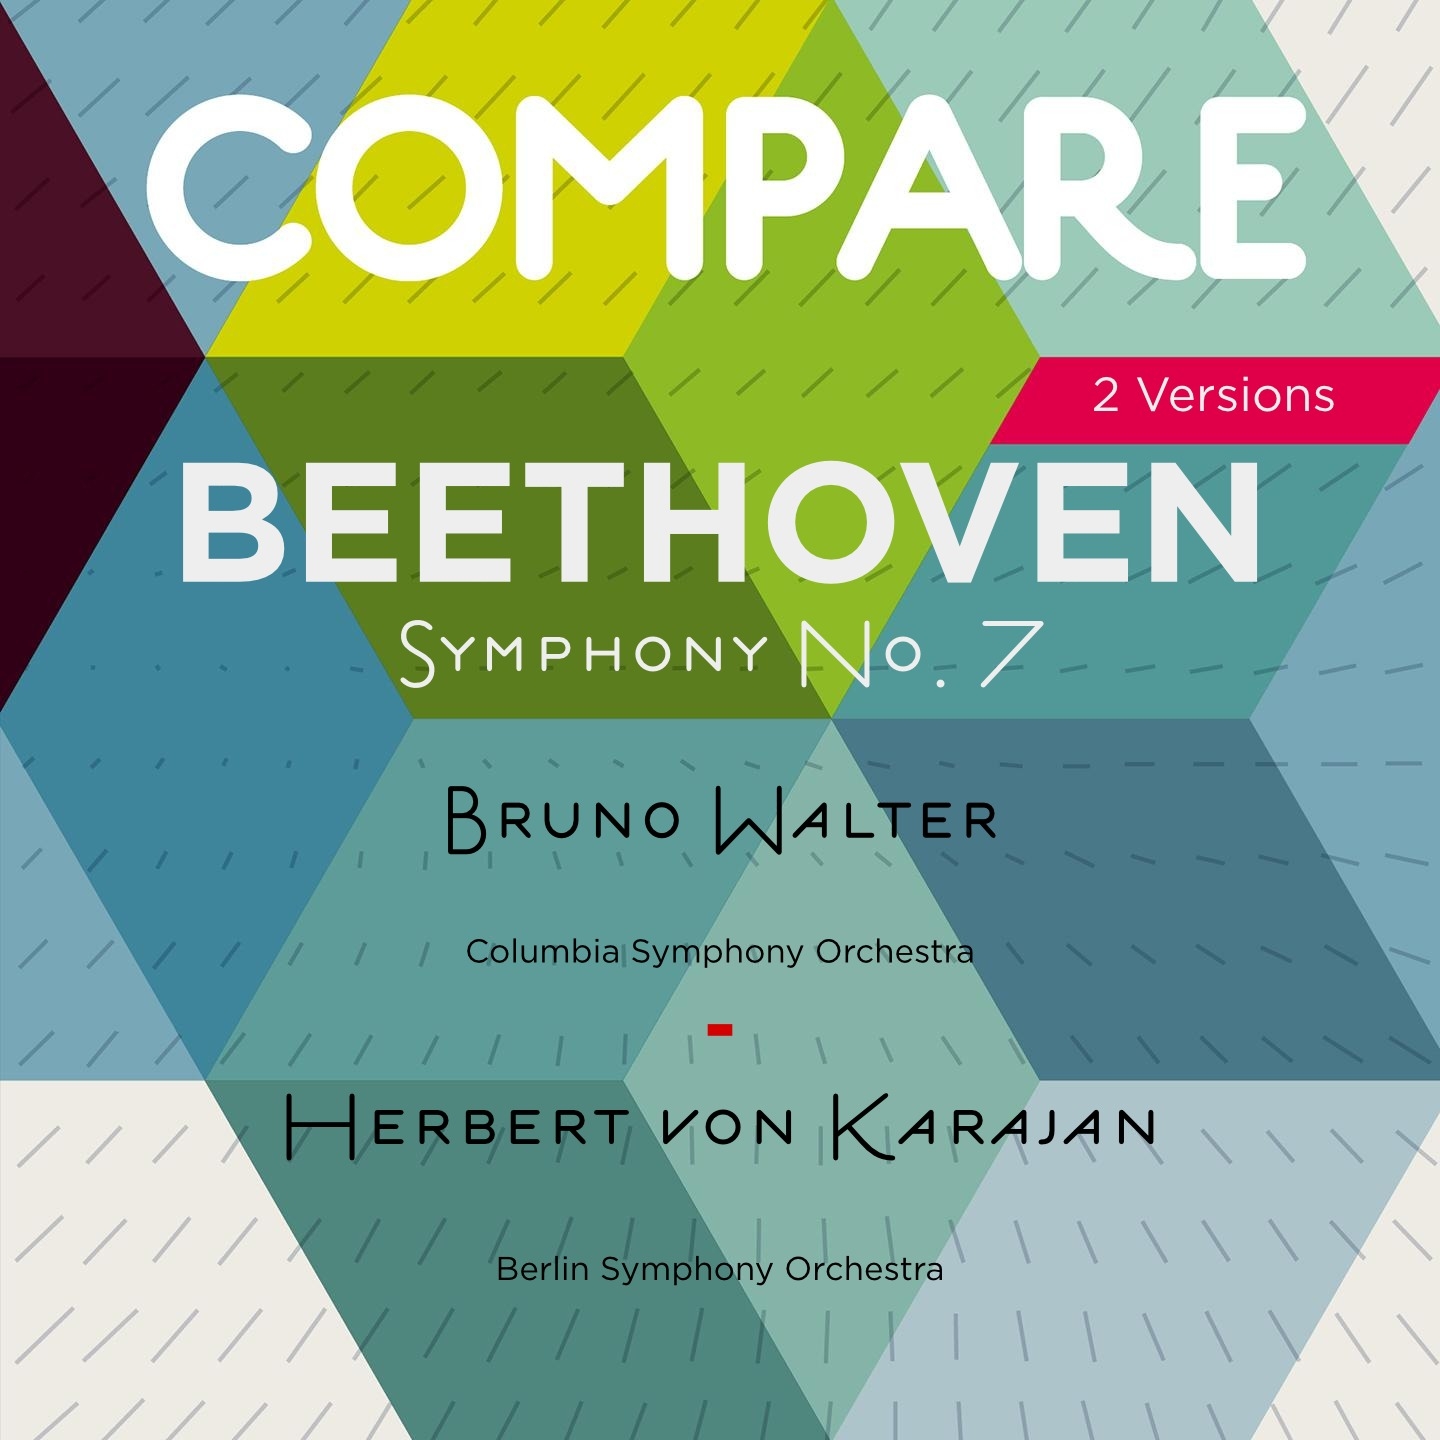 Beethoven: Symphony No. 7, Herbert von Karajan vs. Bruno Walter (Compare 2 Versions)